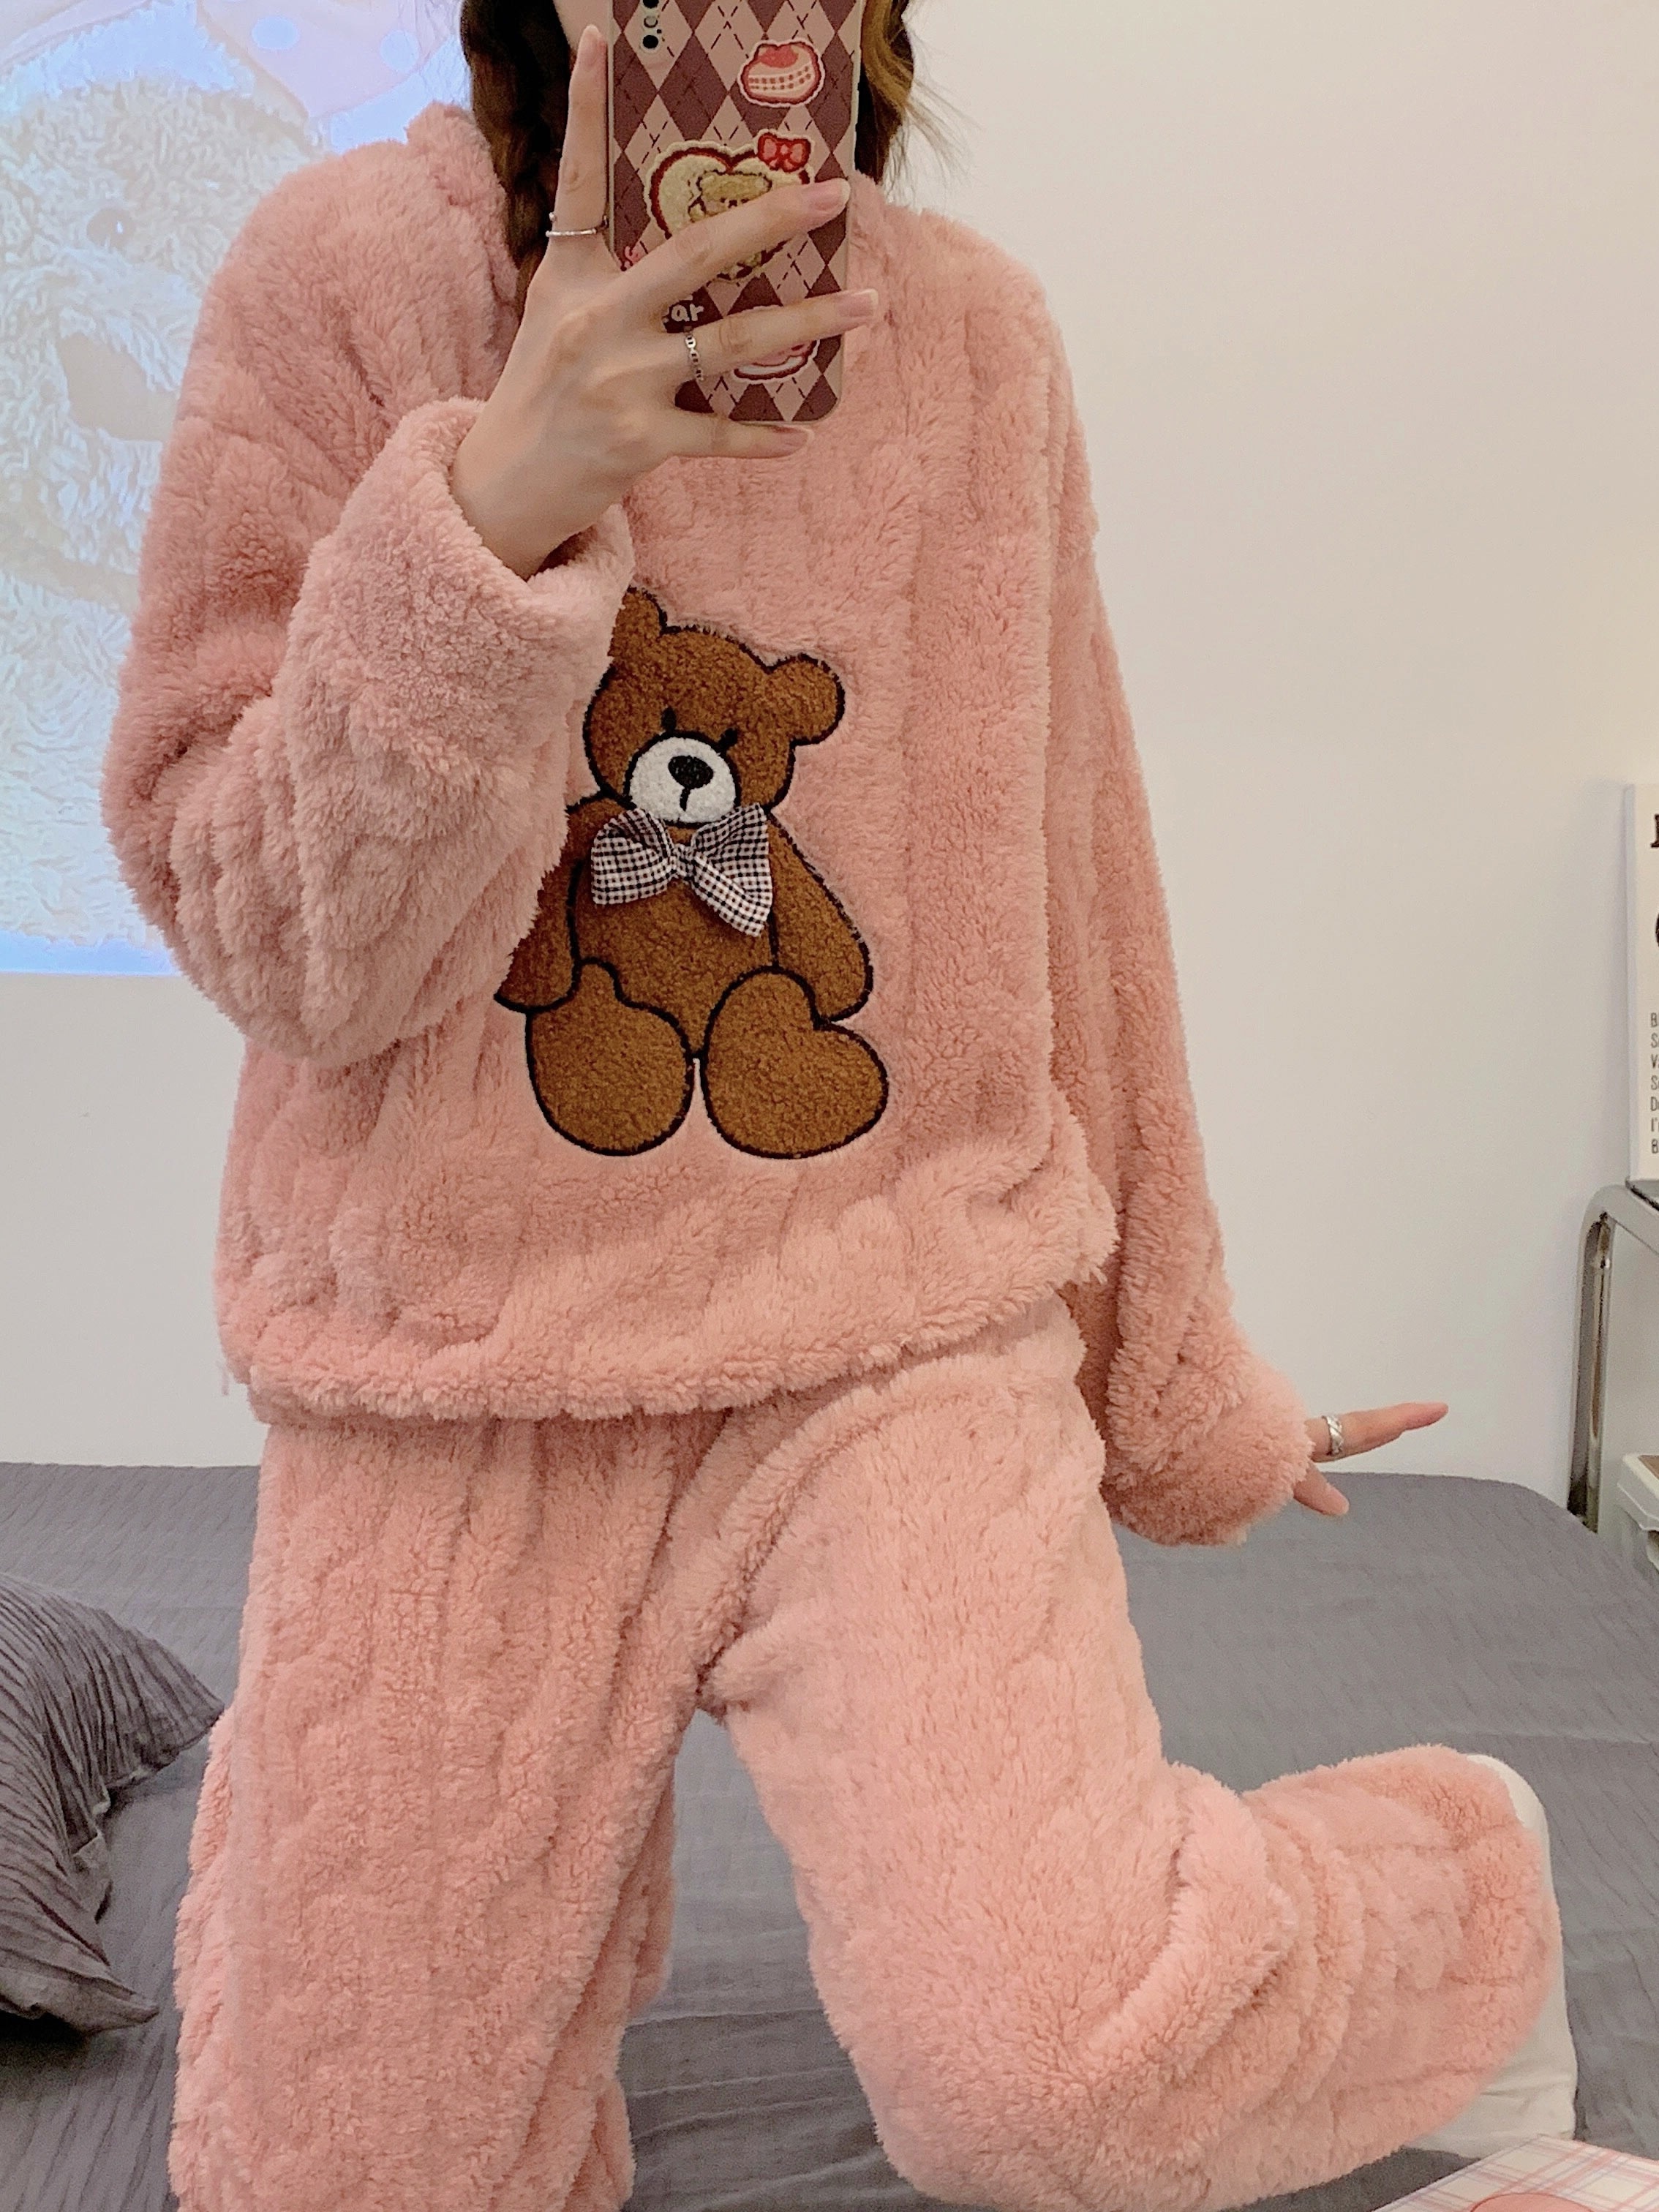 Fluffy Bear Four Seasons Pajama Set